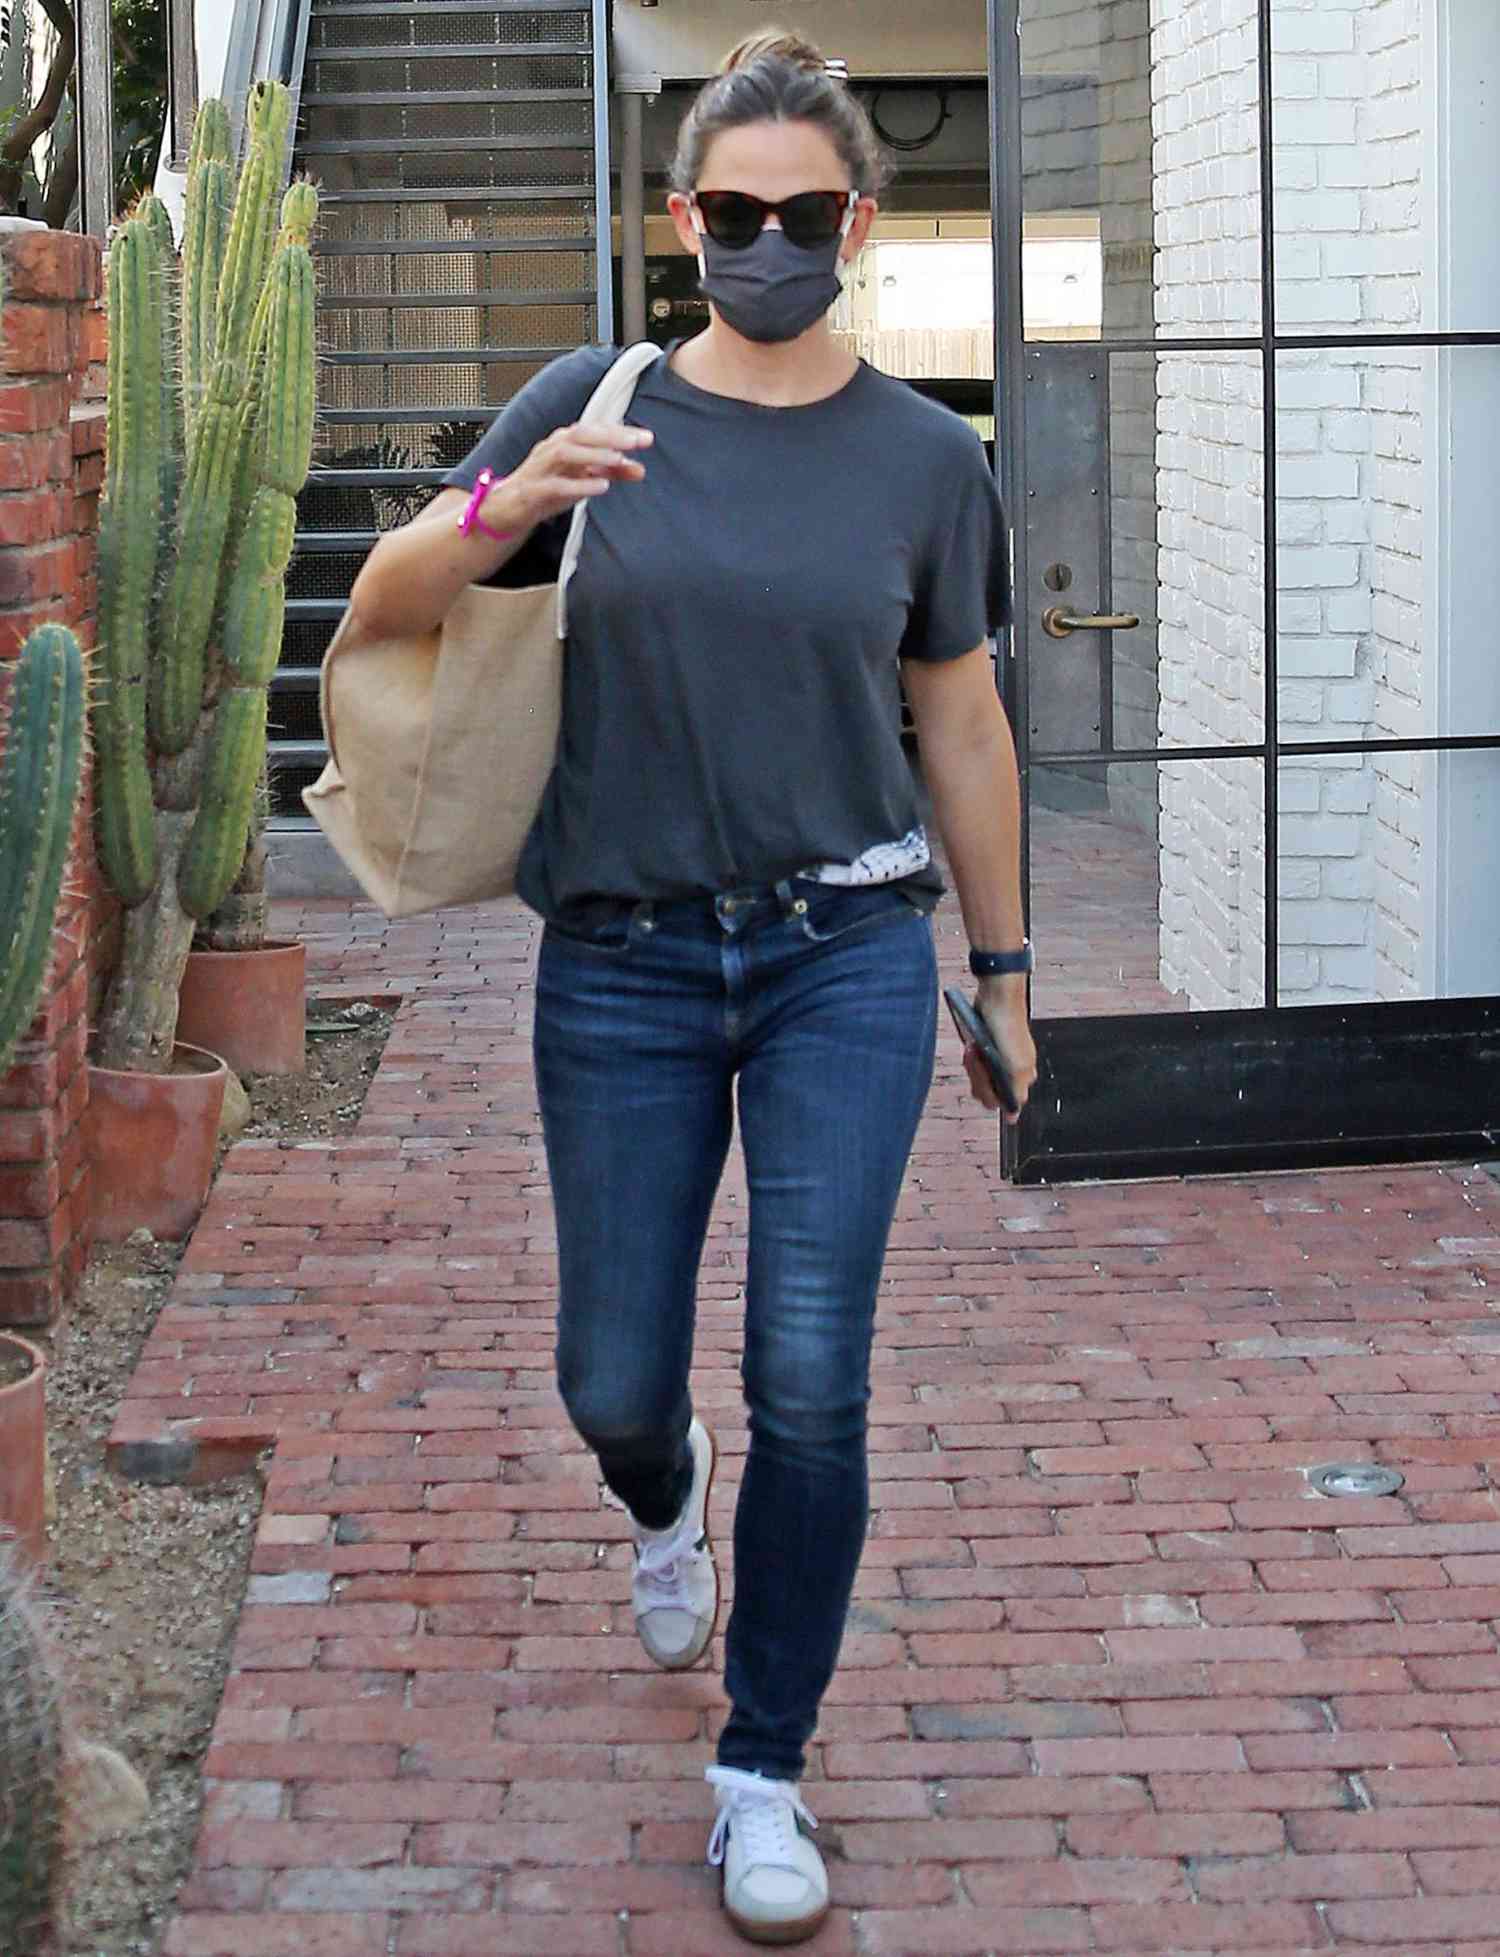 Jennifer Garner leaving a office building in Los Angeles